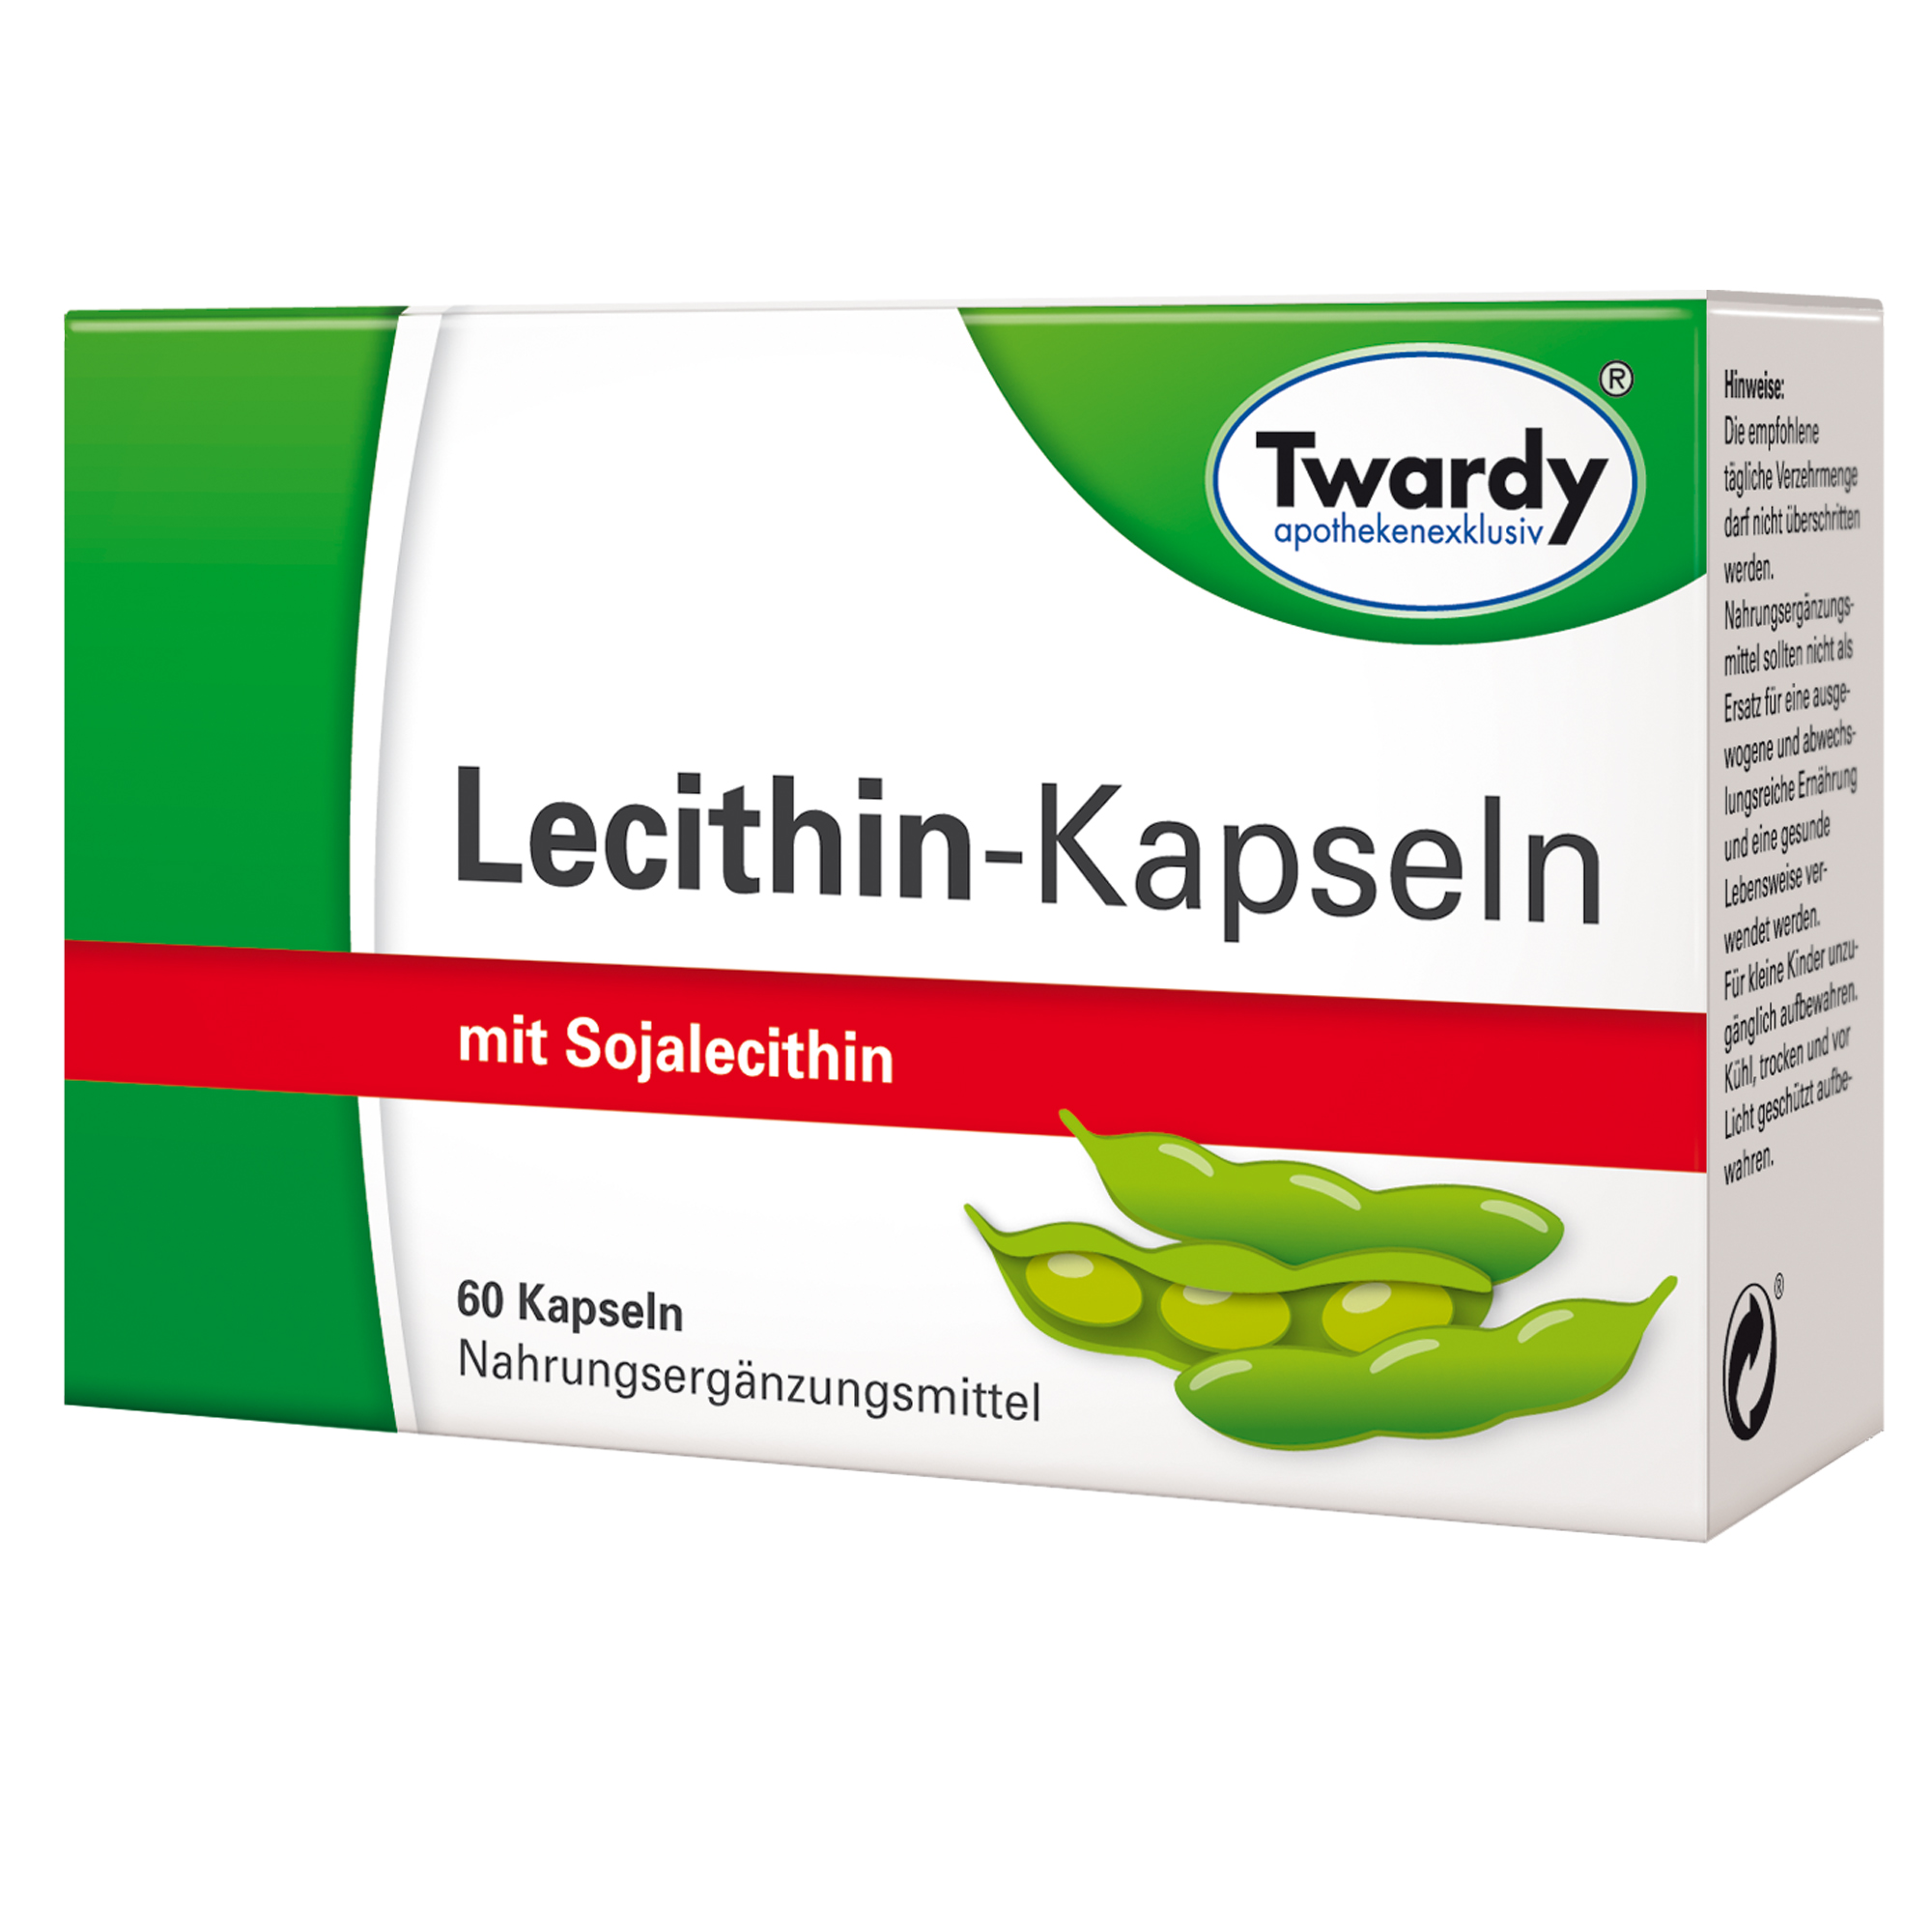 Lecithin-Kapseln – PZN 03239500